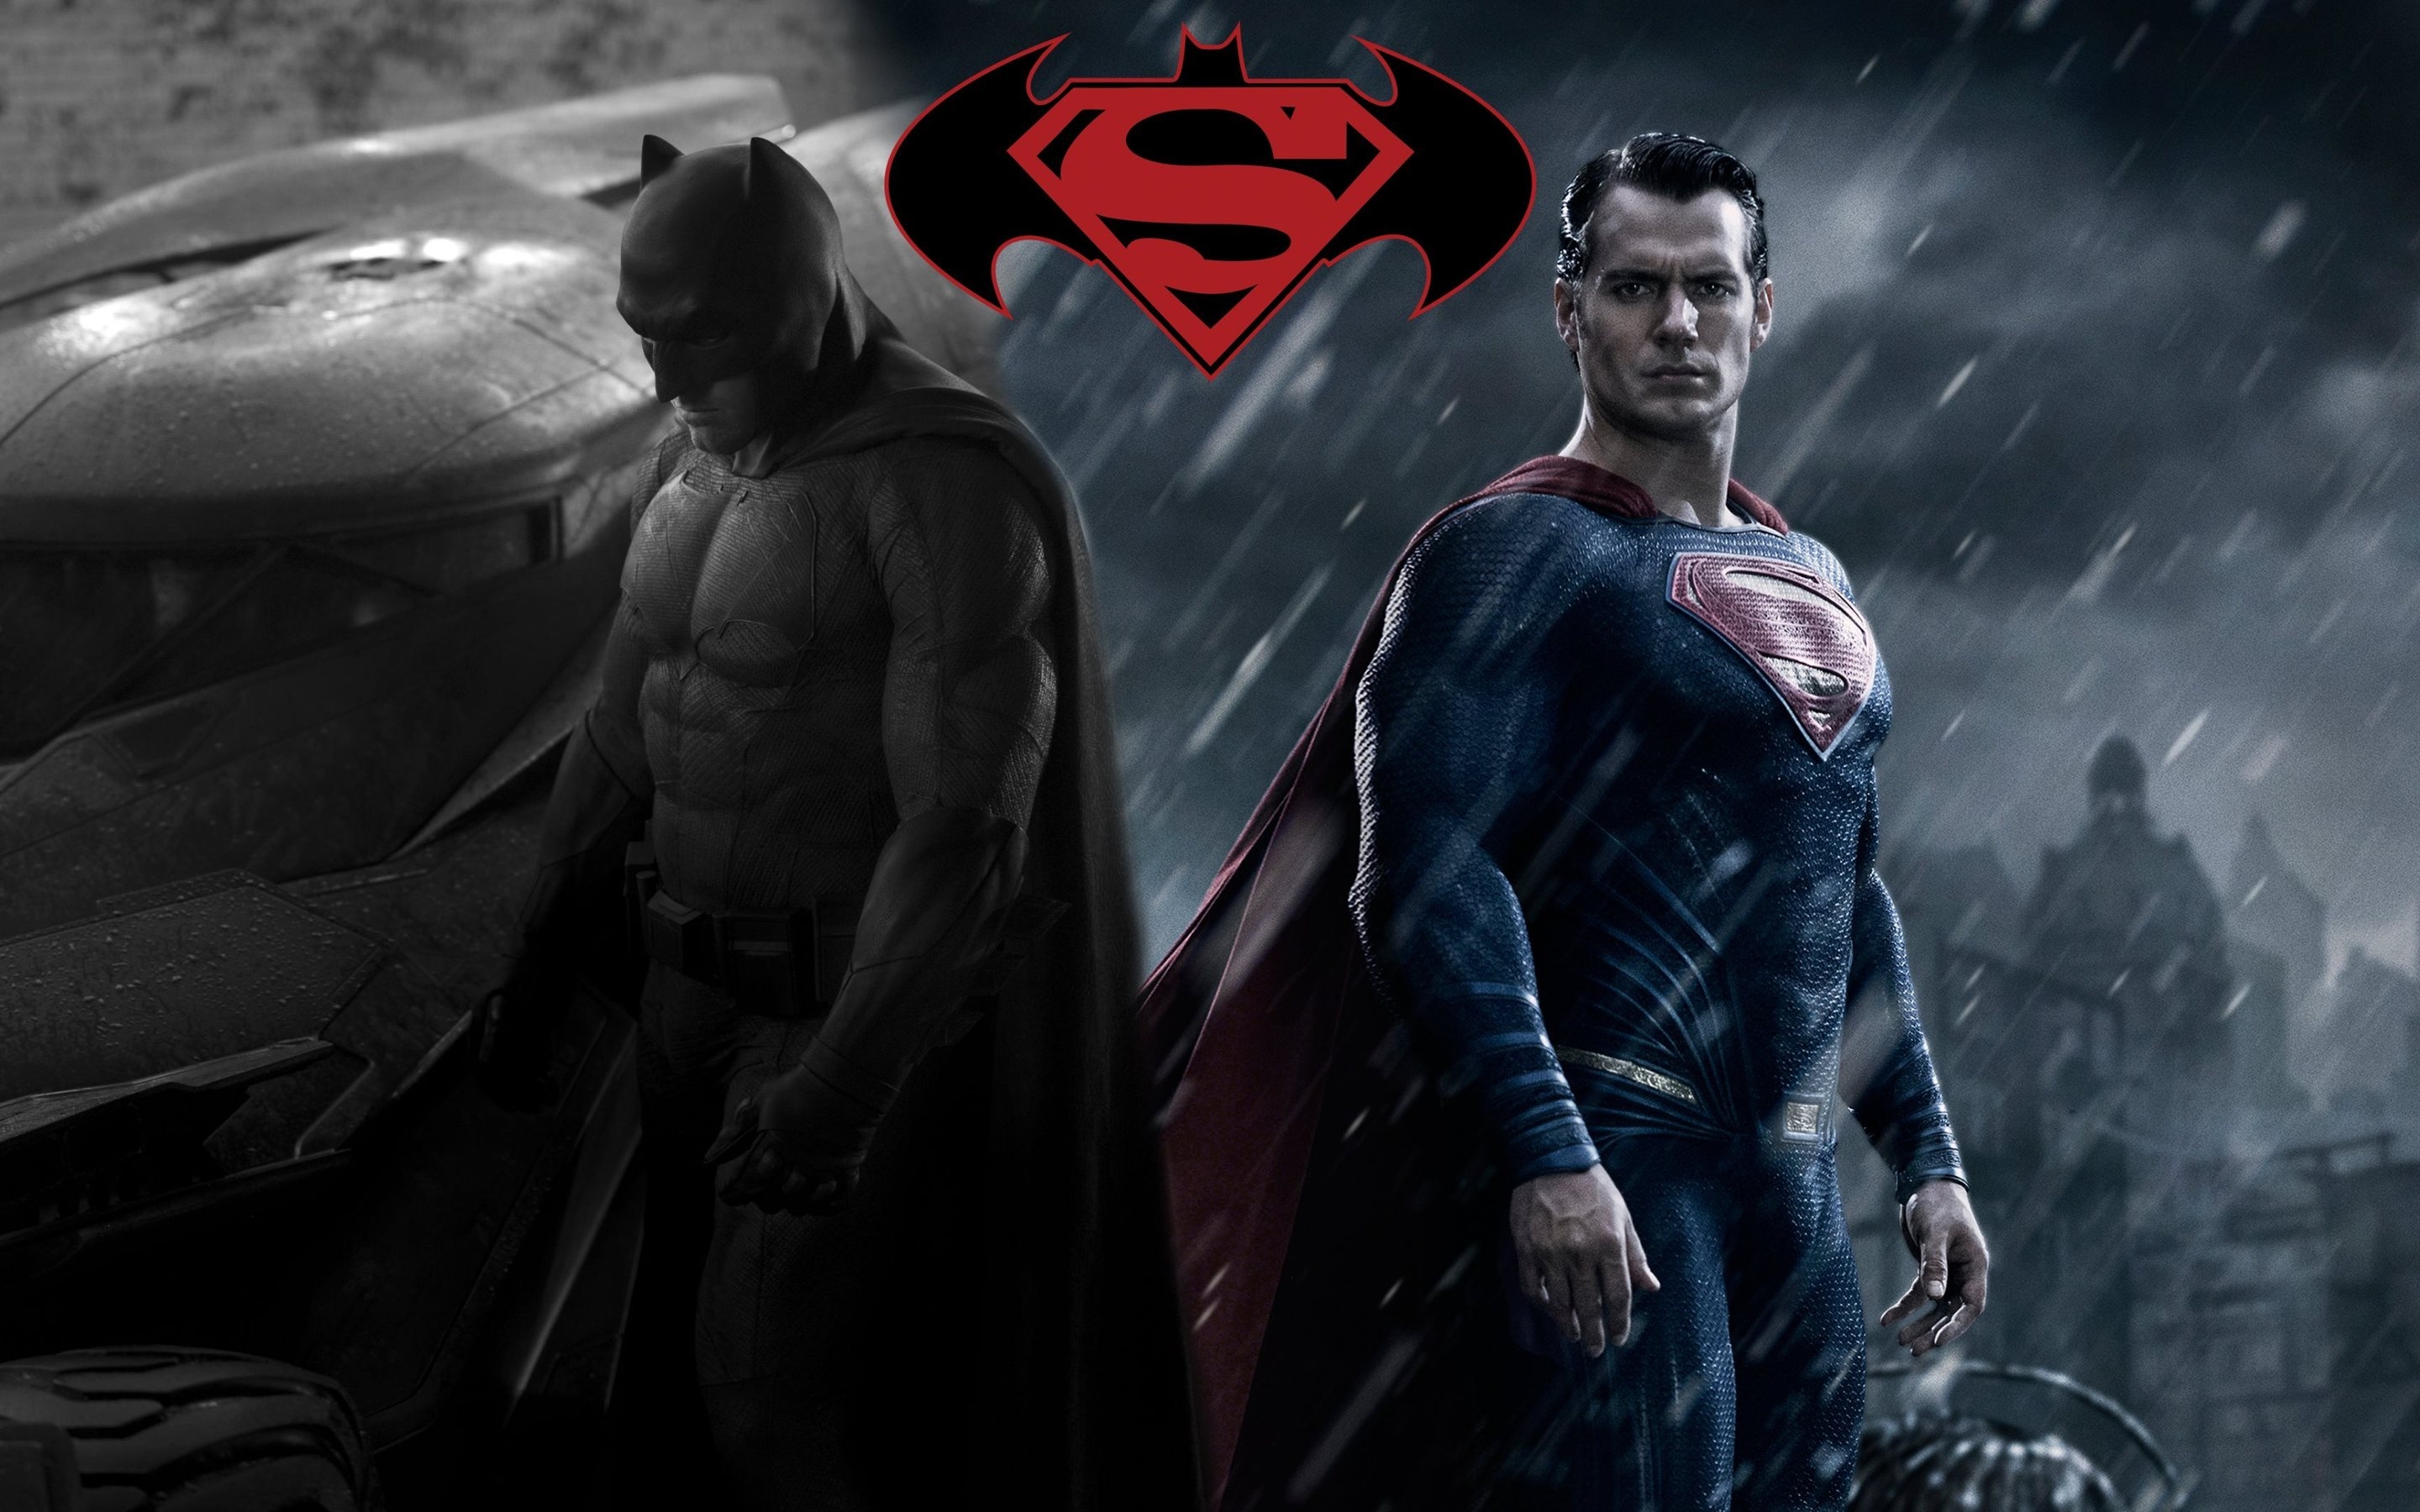 Batman vs Superman Fan Art for 2880 x 1800 Retina Display resolution